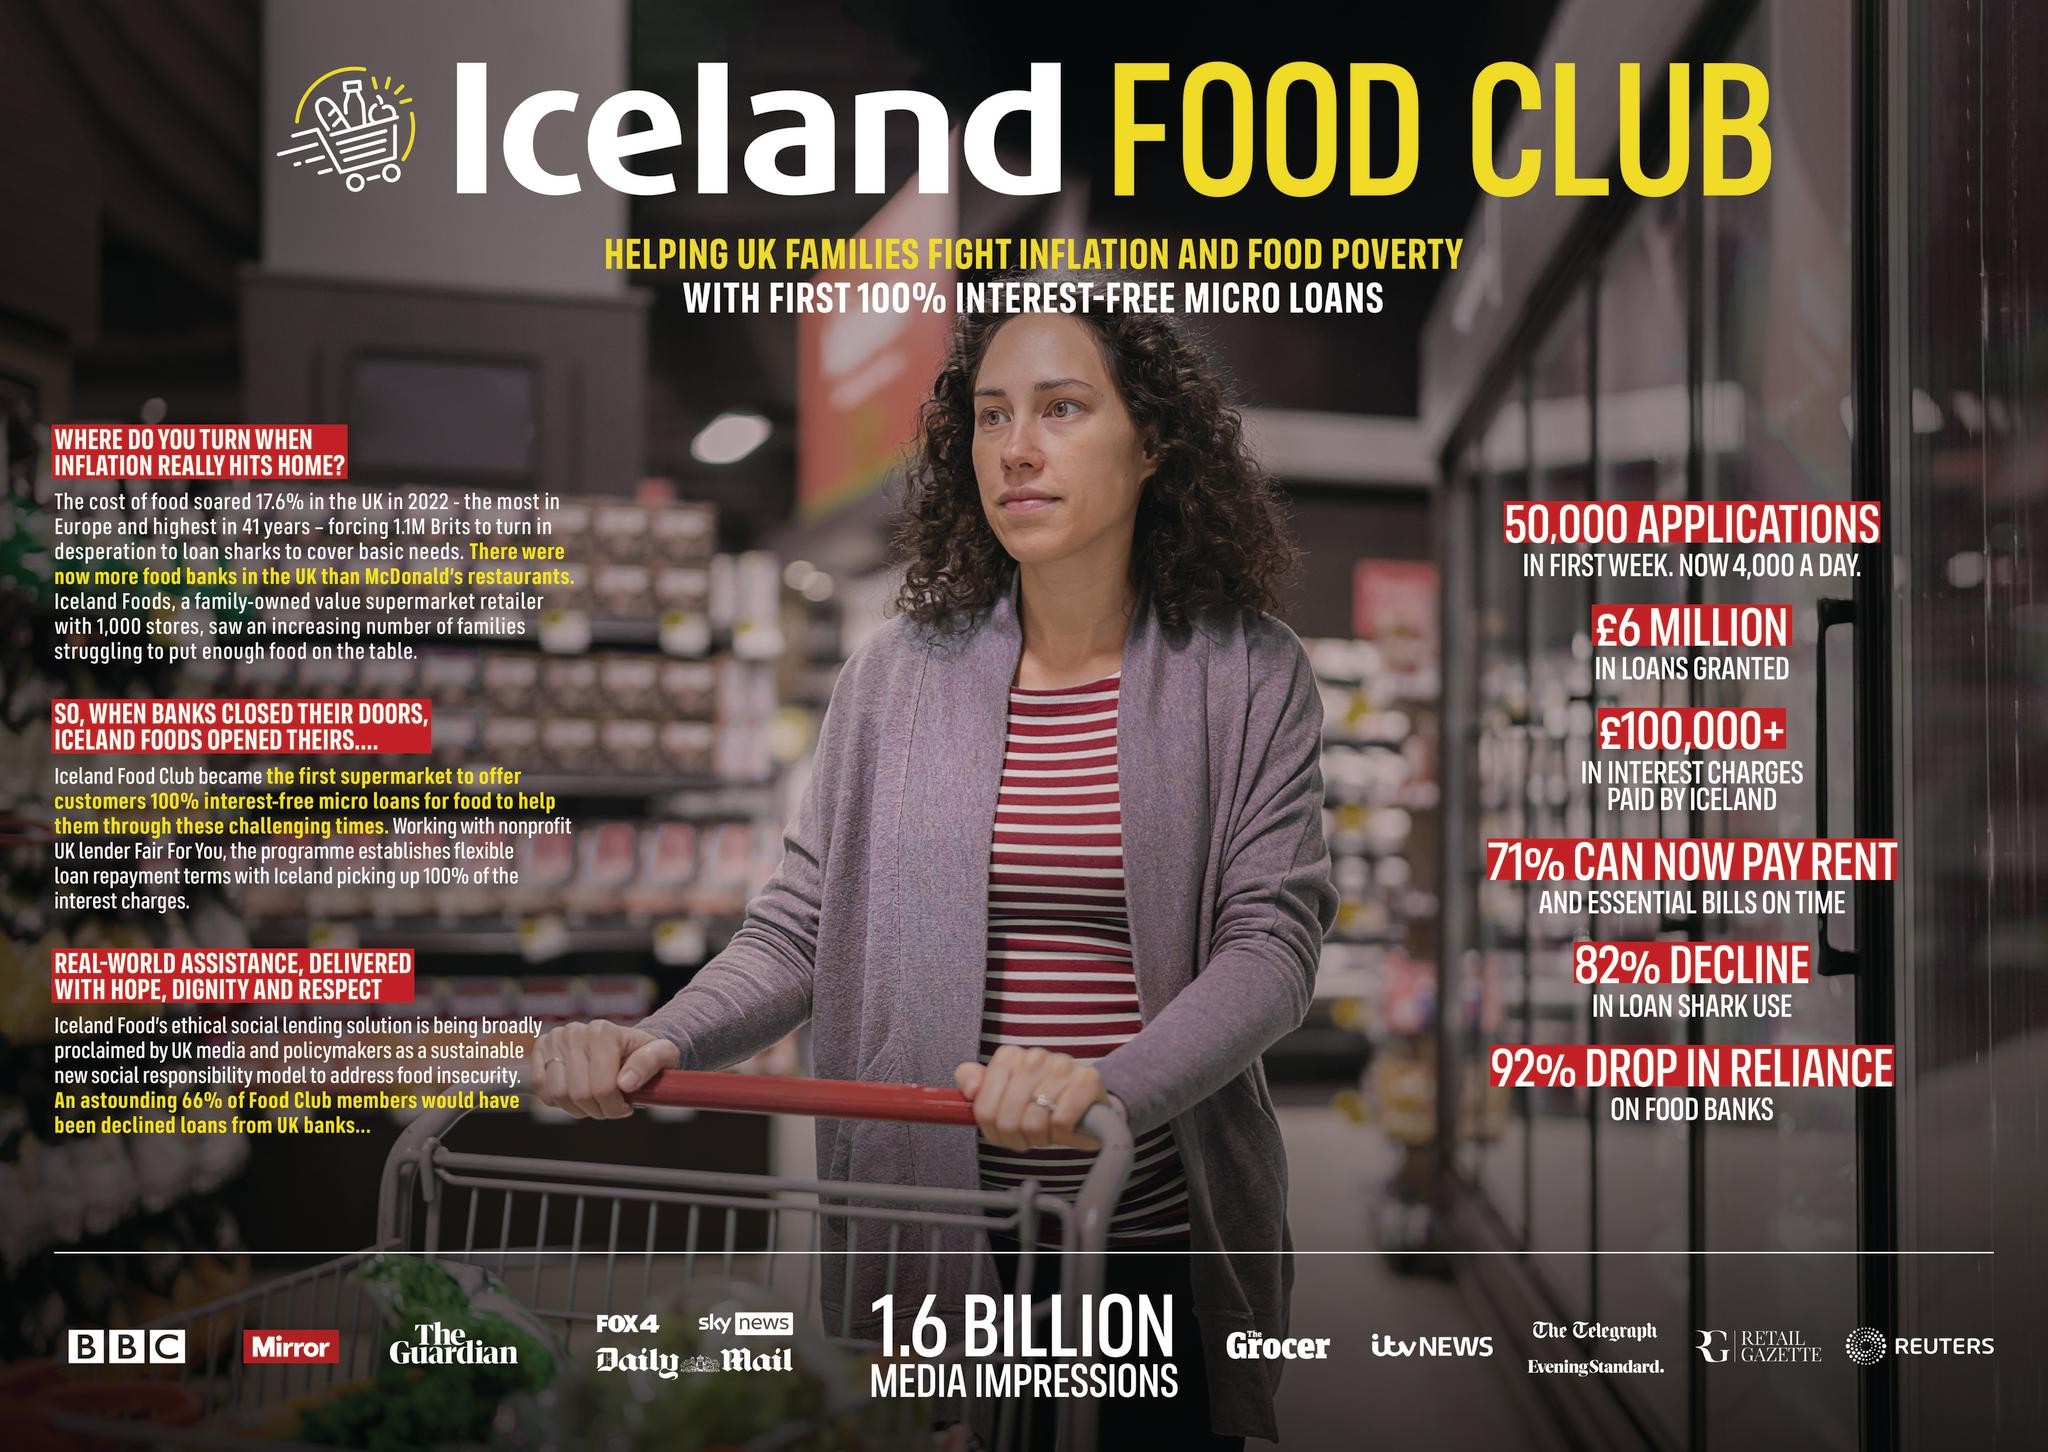 THE ICELAND FOOD CLUB